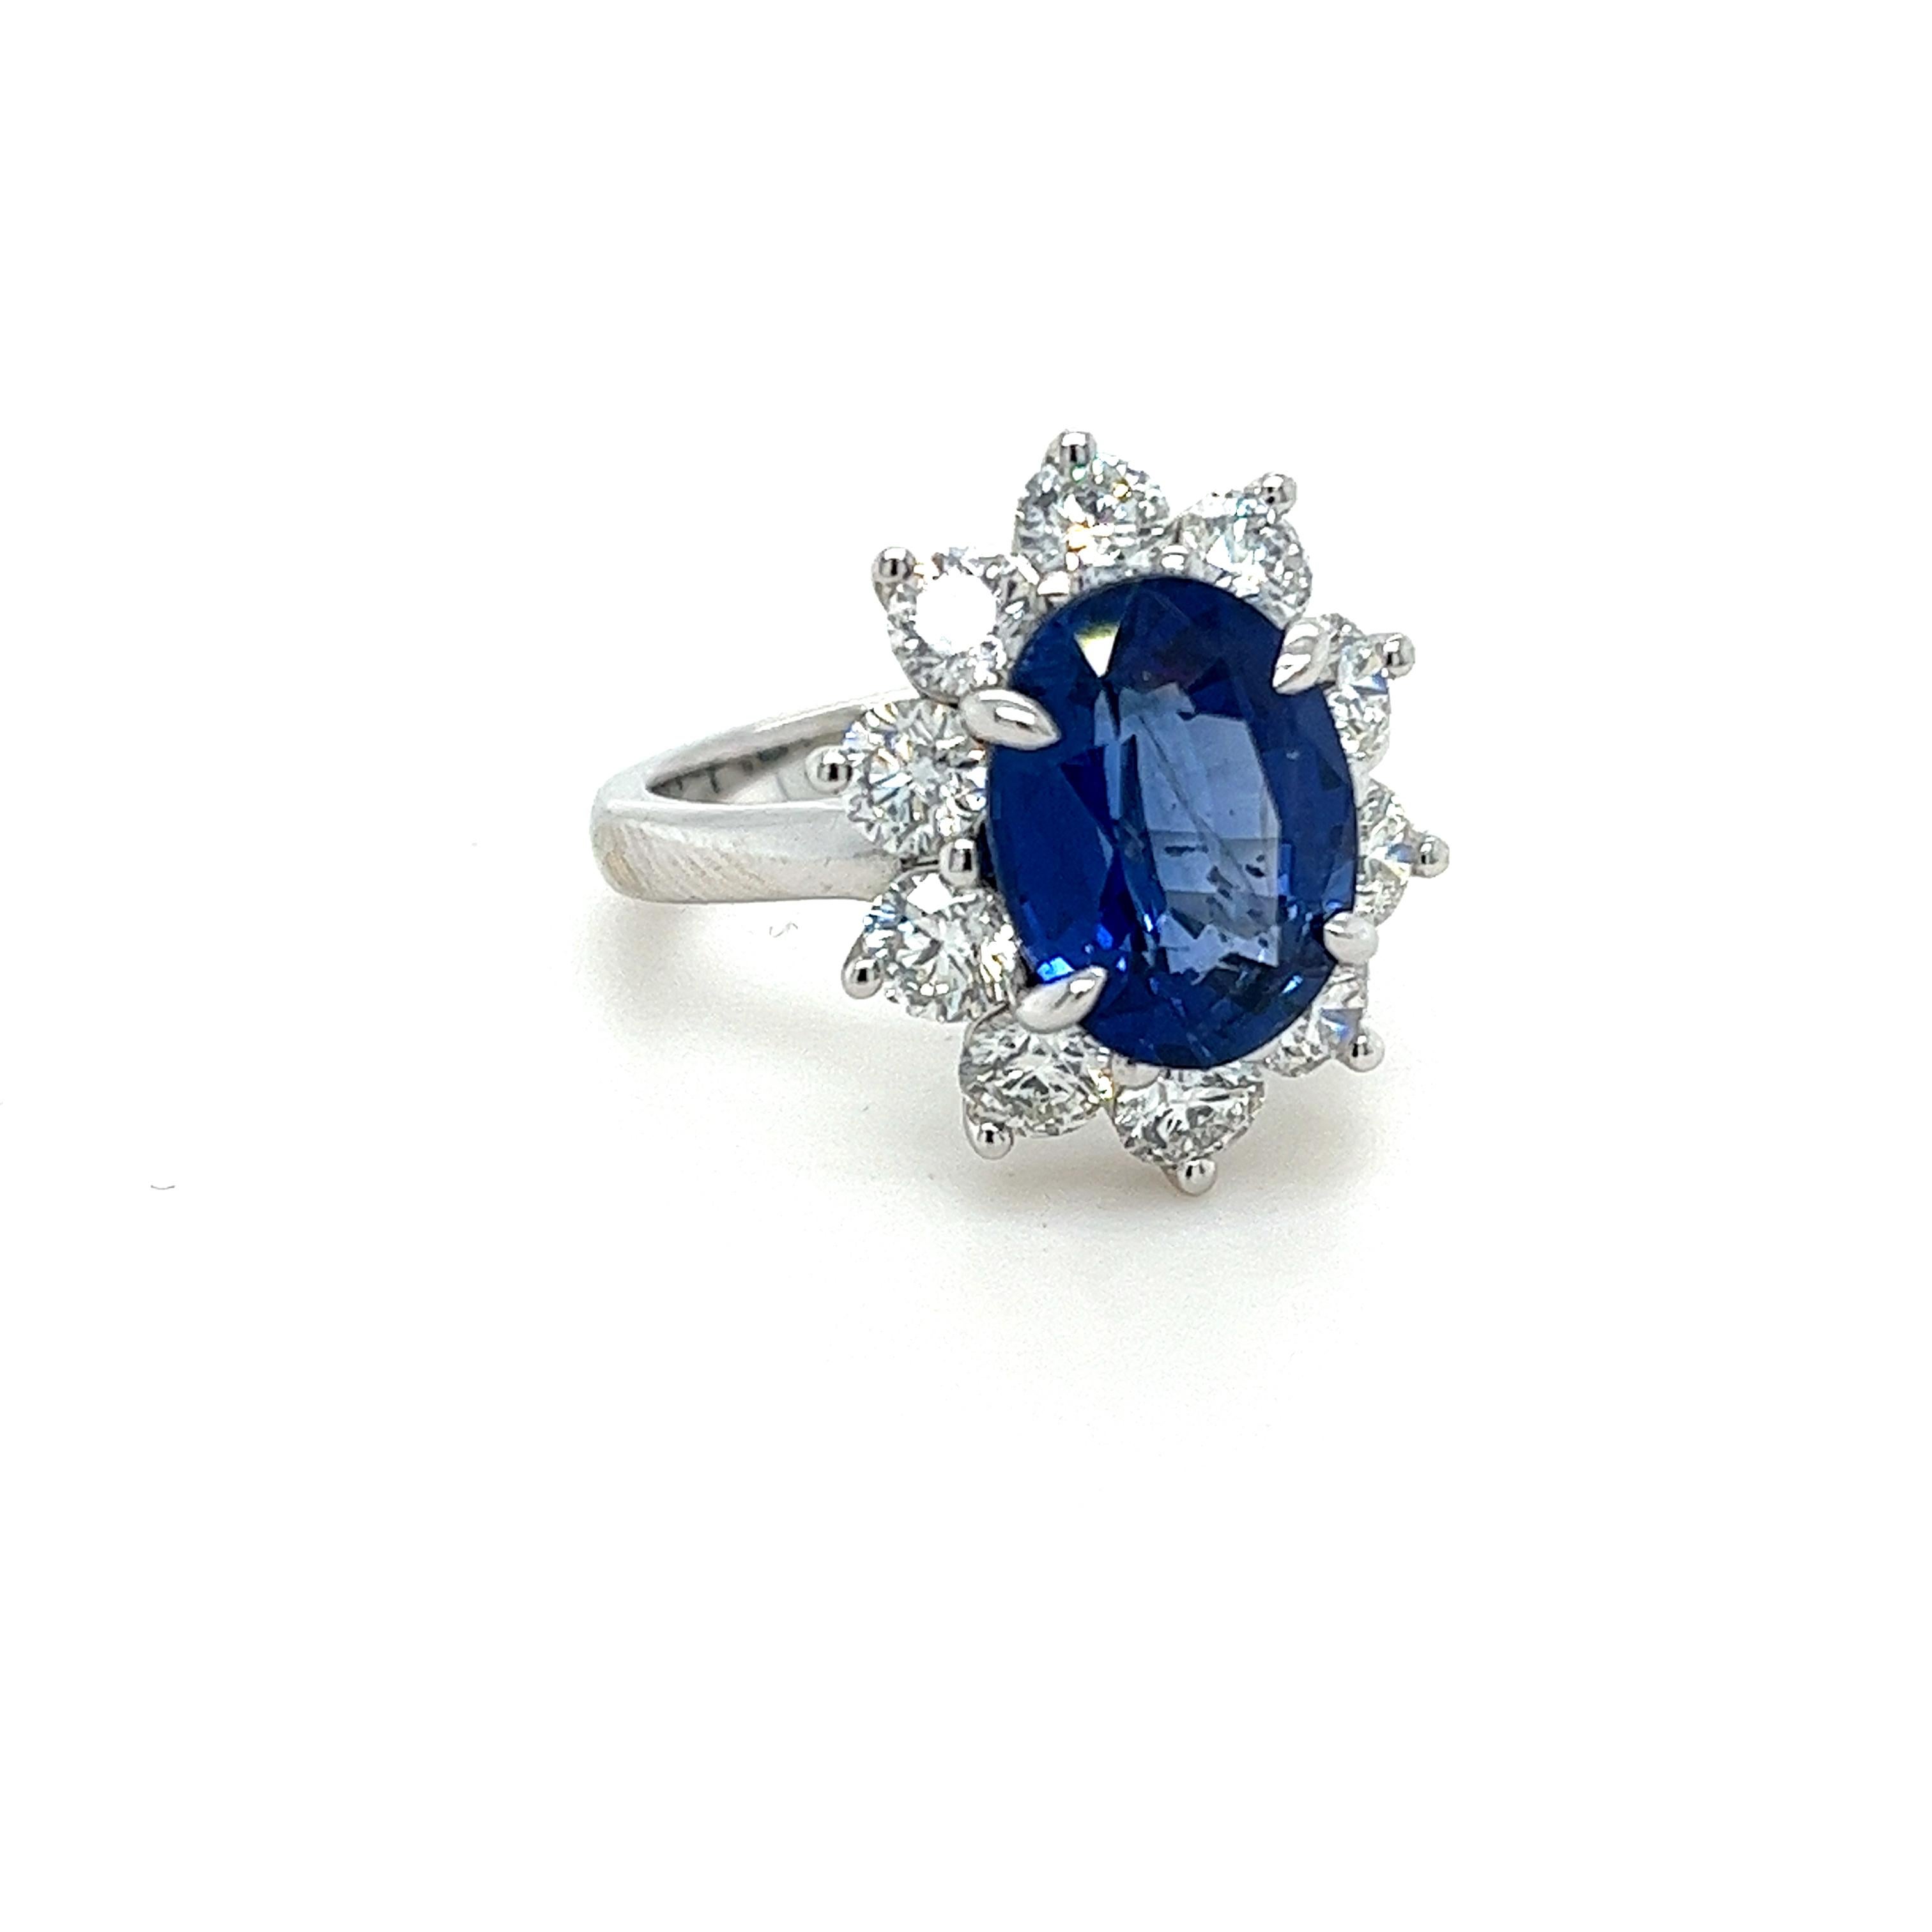 GIA Certified oval Ceylon Sapphire weighing 4.98 carats
Measuring (11.89x8.98x5.53) mm
Diamonds weighing 2.02 carats
Set in 18 karat white gold ring
